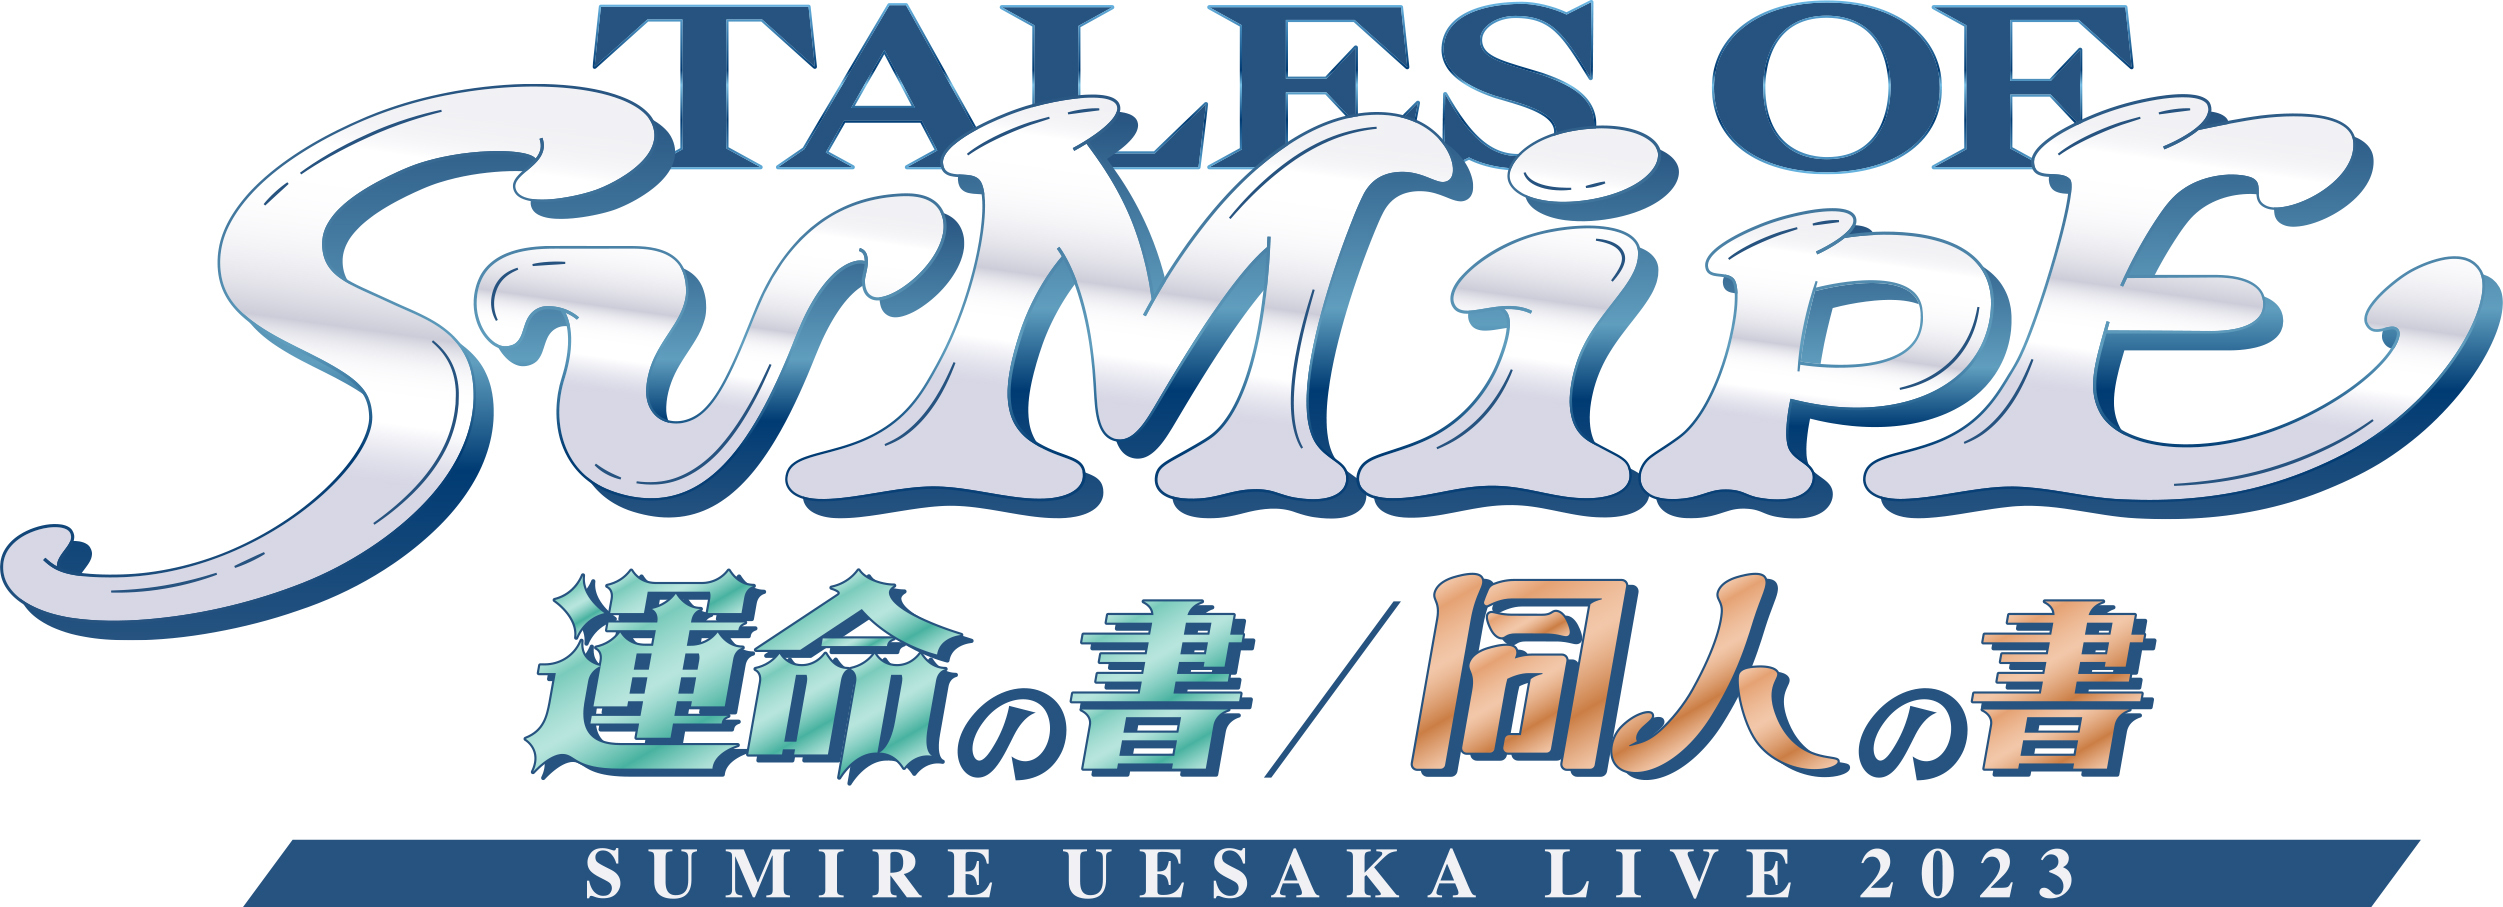 『SUMIRE UESAKA LIVE 2023 TALES OF SUMIPE 運命の書／同人の書』